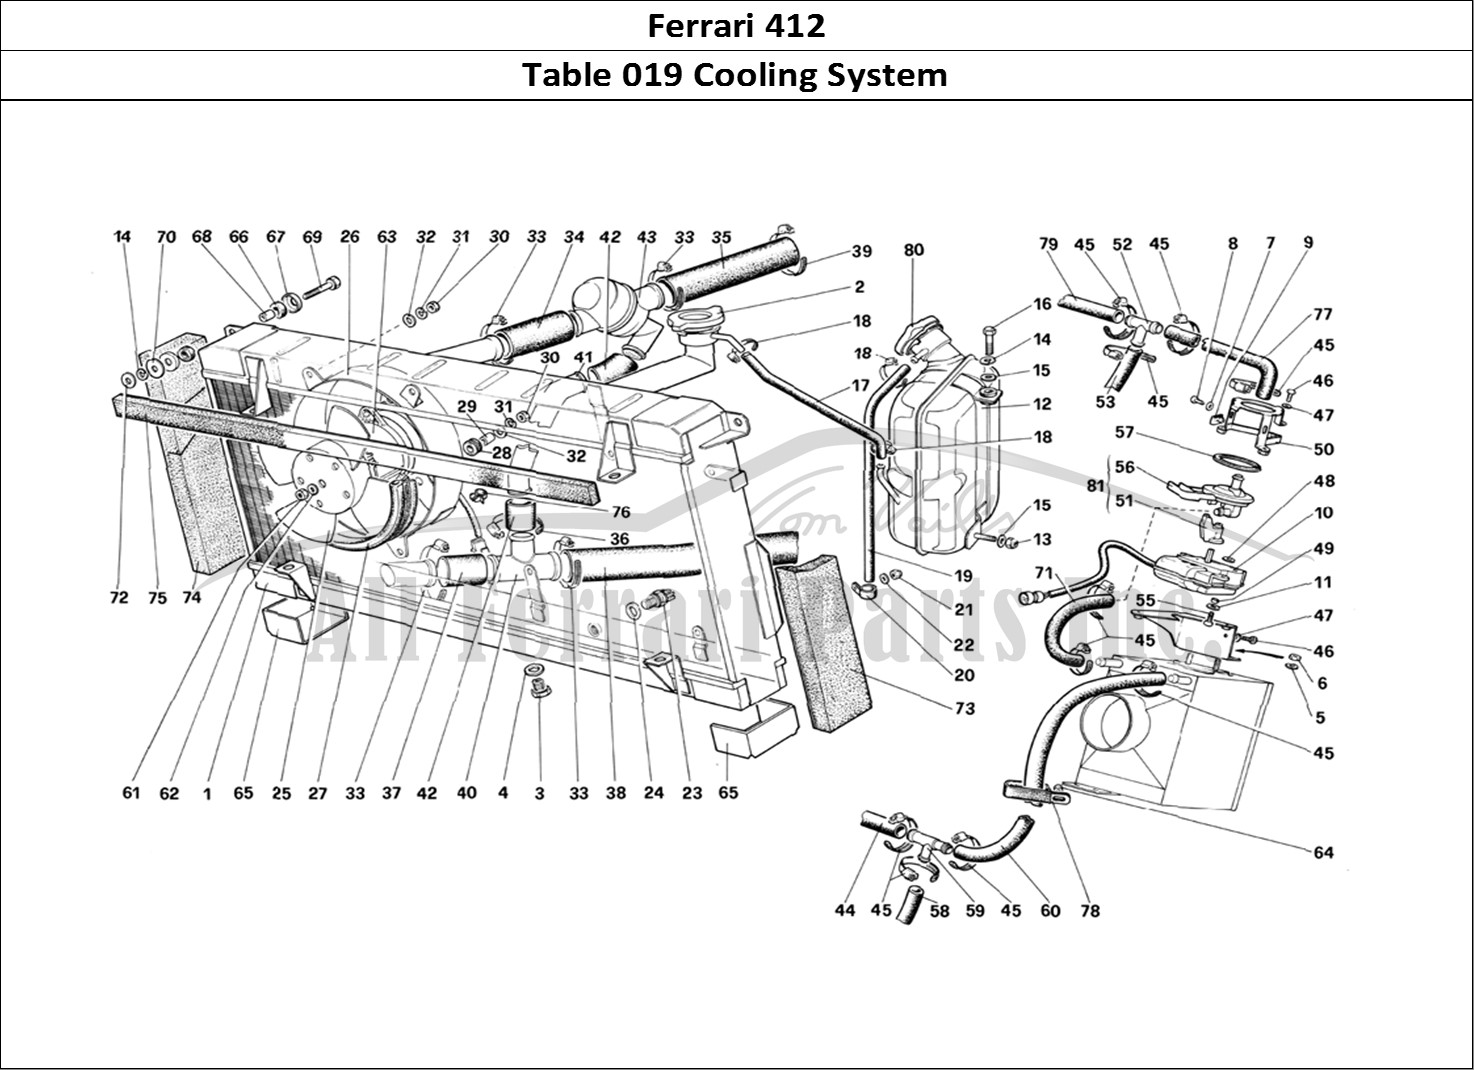 Ferrari Parts Ferrari 412 (Mechanical) Page 019 Cooling System